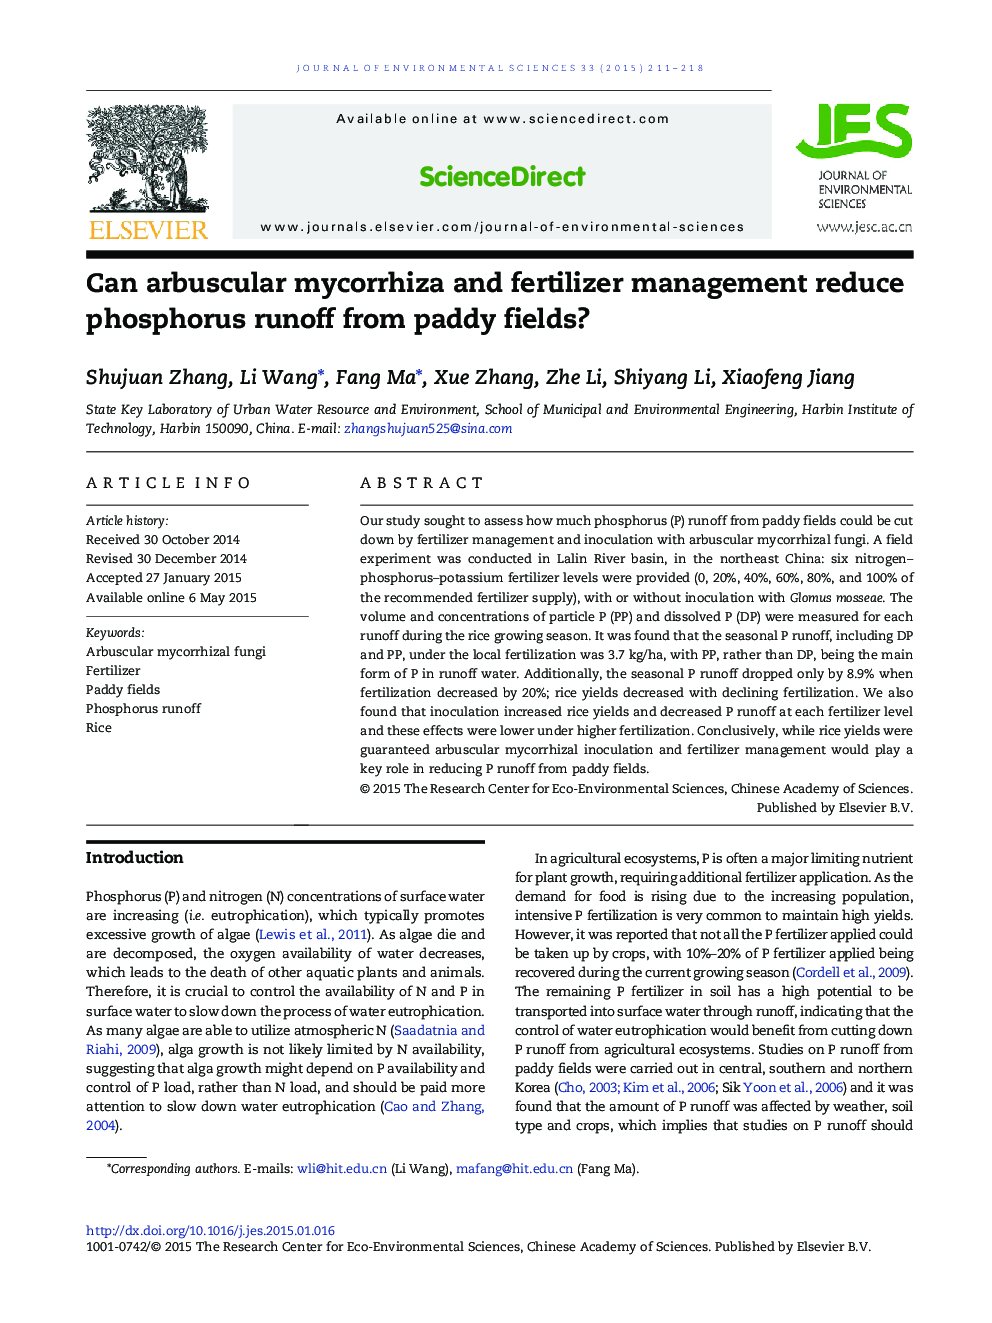 Can arbuscular mycorrhiza and fertilizer management reduce phosphorus runoff from paddy fields?